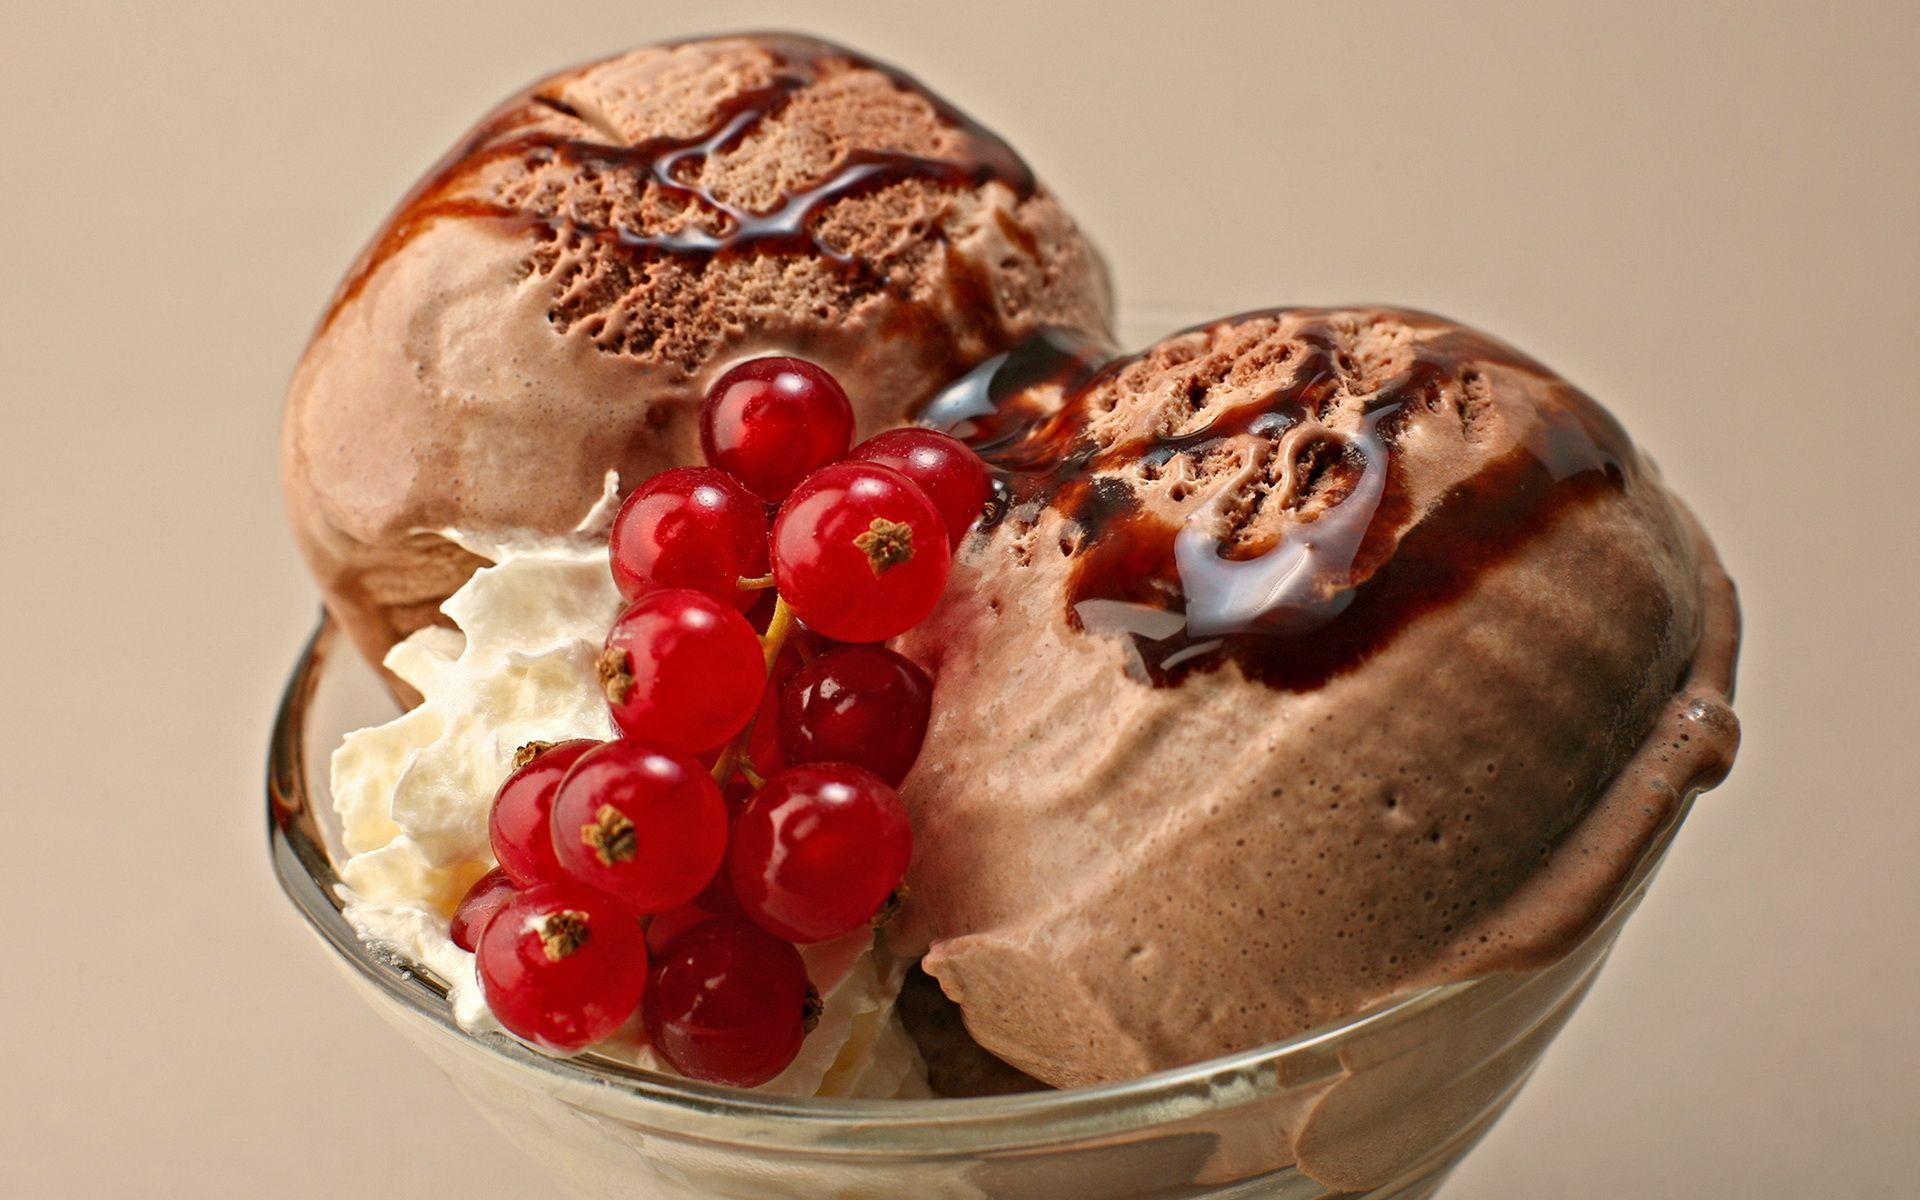 Balls of chocolate ice cream wallpaper and image